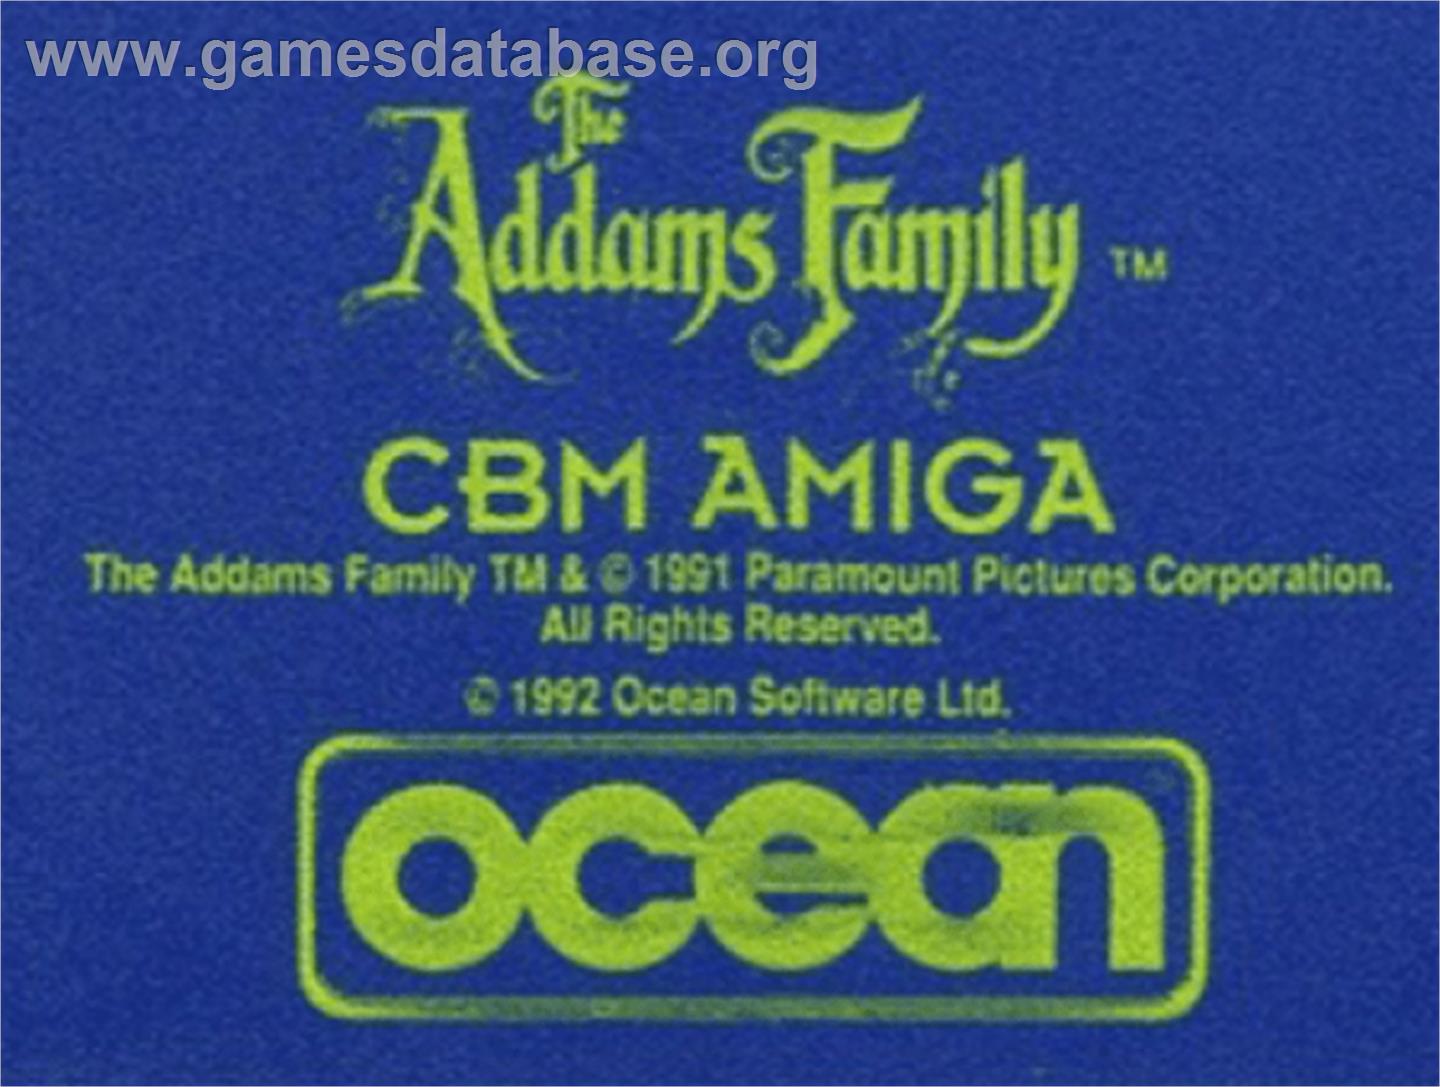 Addams Family, The - Commodore Amiga - Artwork - Cartridge Top